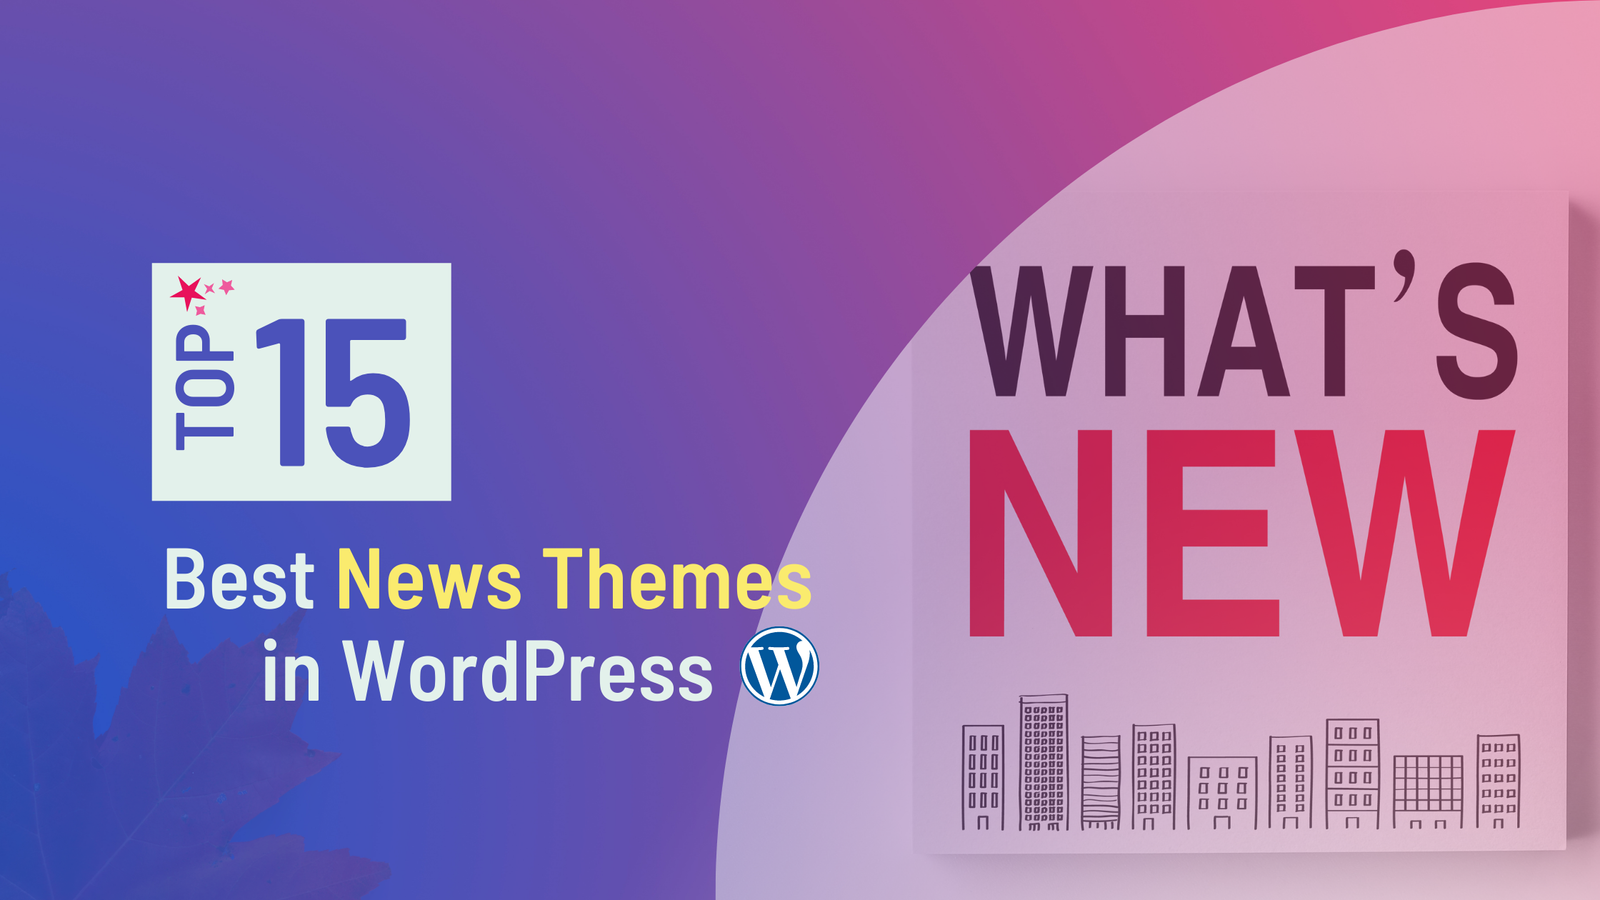 15 Best News Themes in WordPress 2022